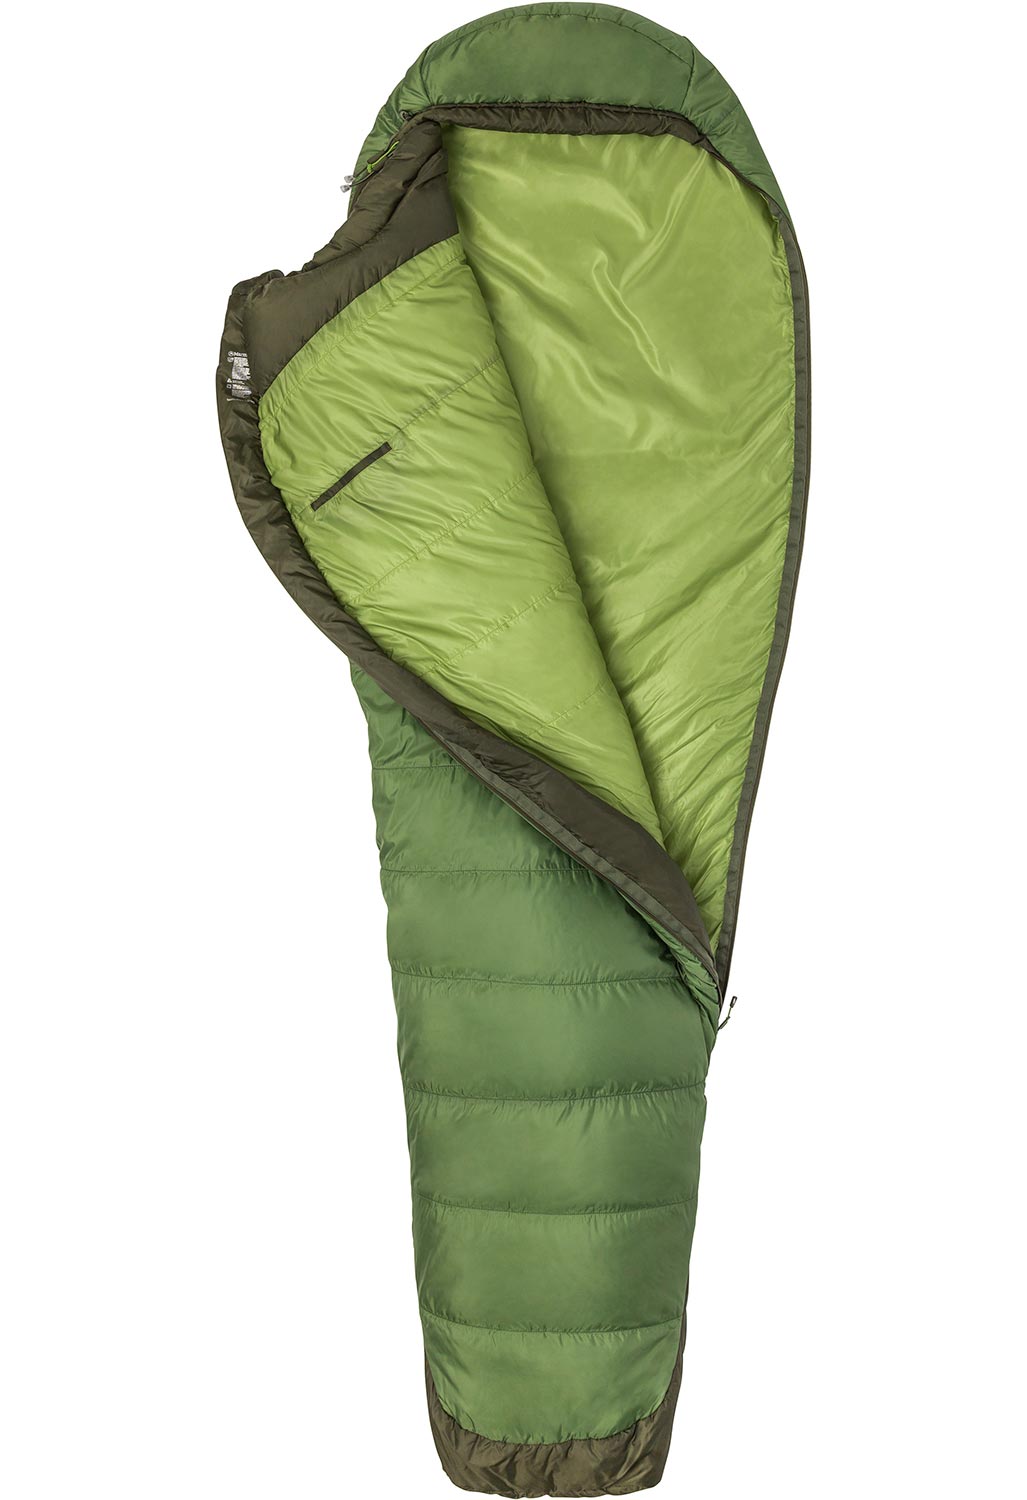 Marmot Trestles Elite Eco 30 Long Sleeping Bag - Vine Green/Forest Night